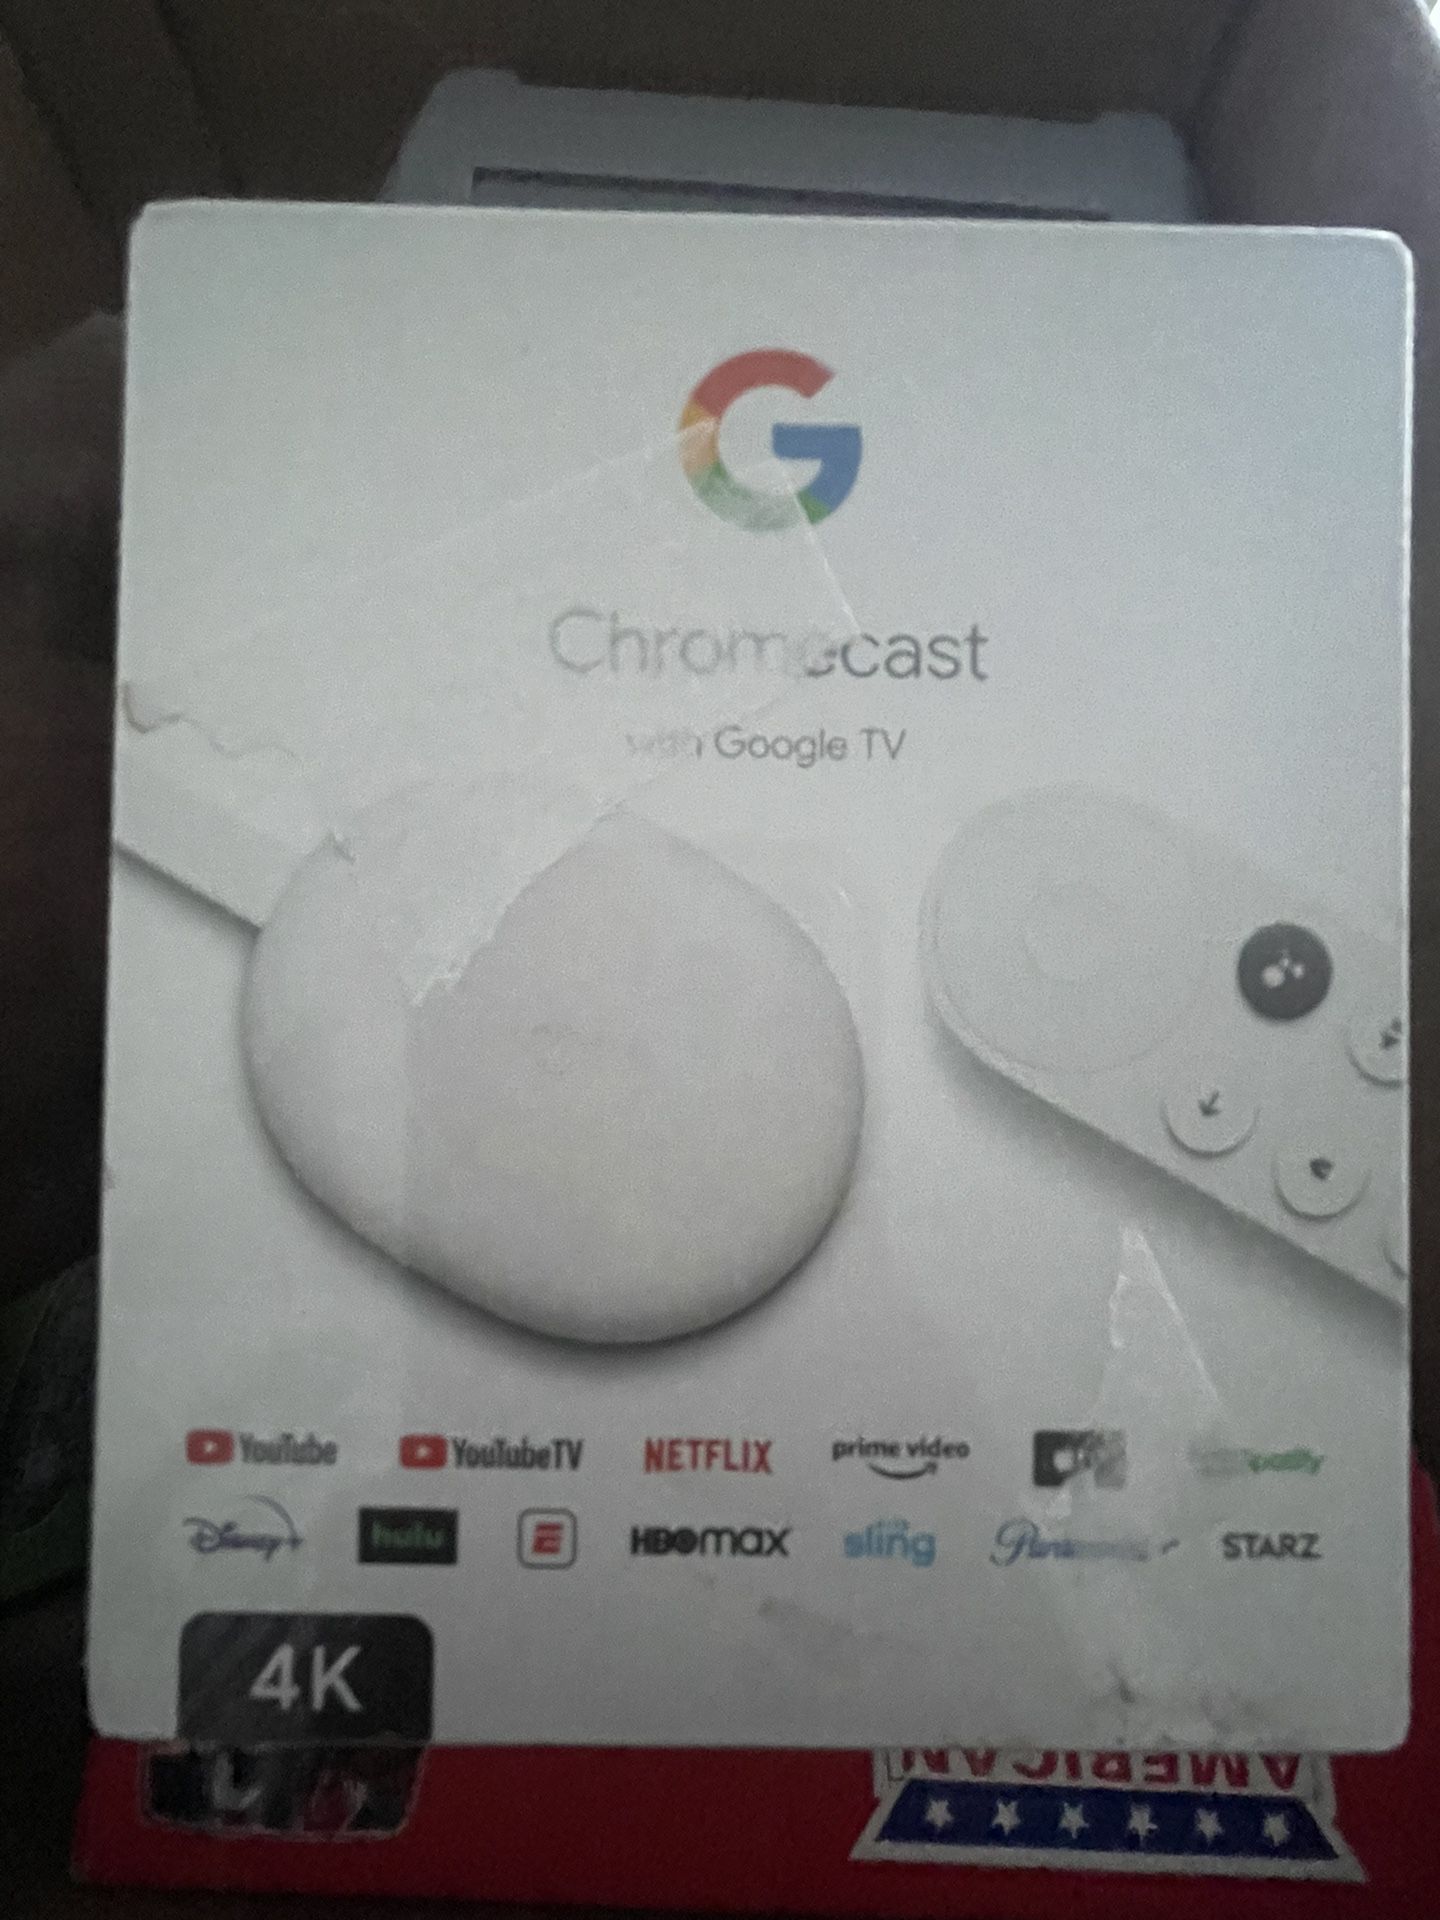 Google ChromeCast